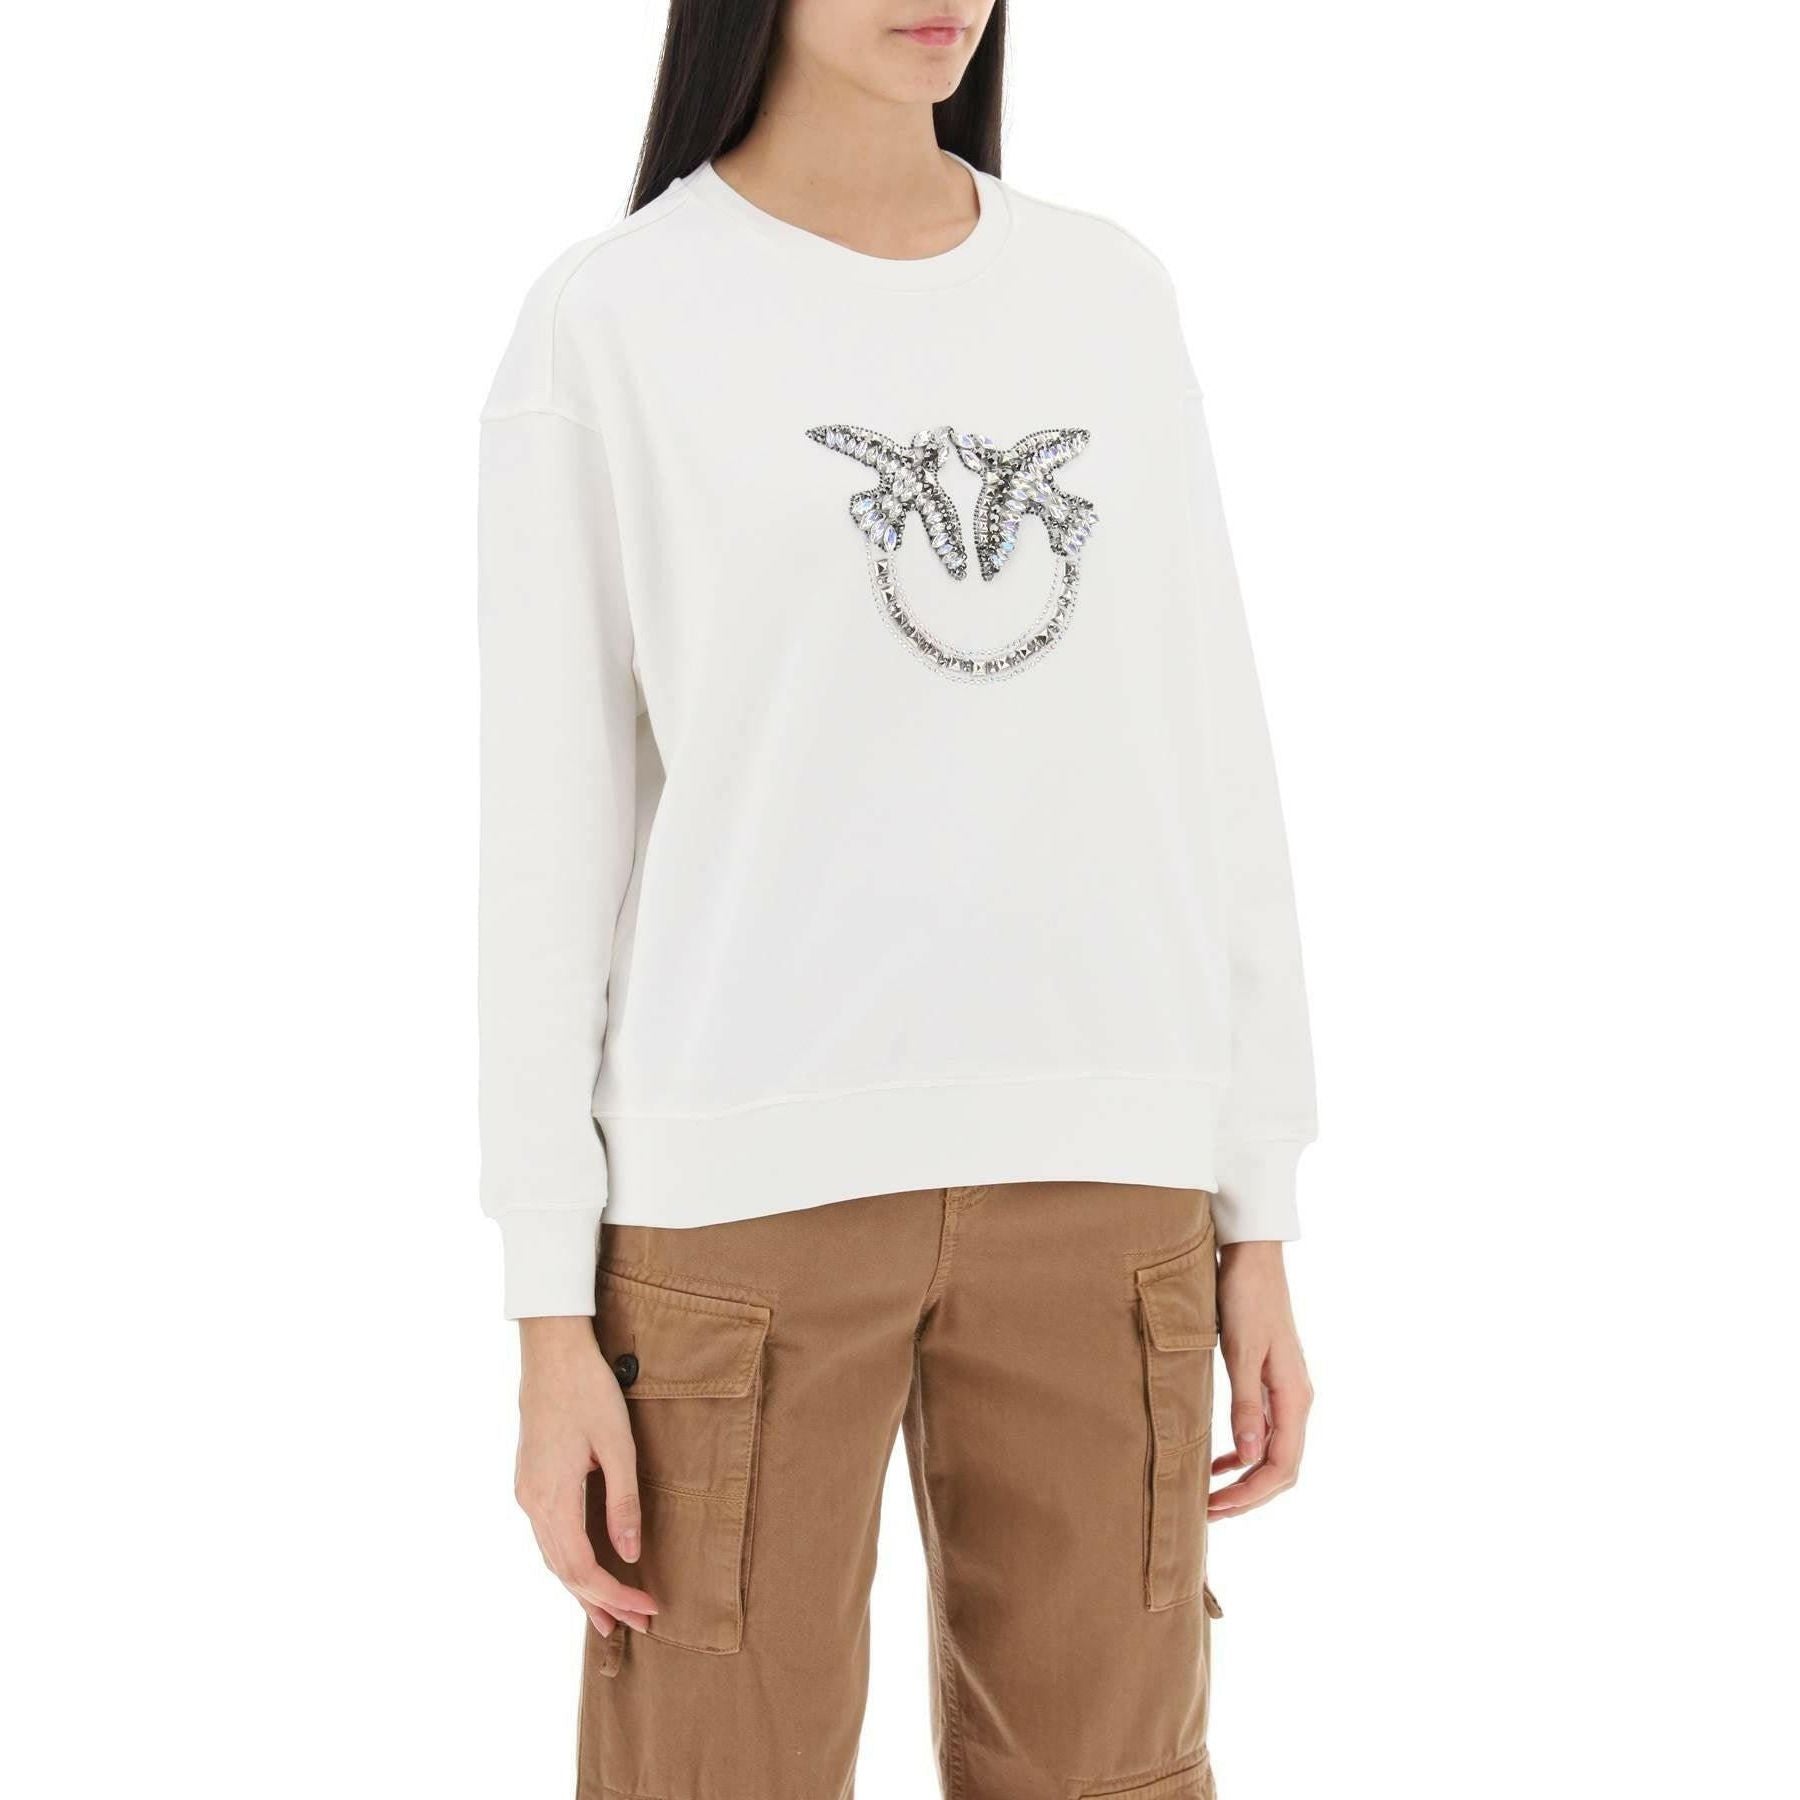 Nelly Sweatshirt With Love Birds Embroidery PINKO JOHN JULIA.